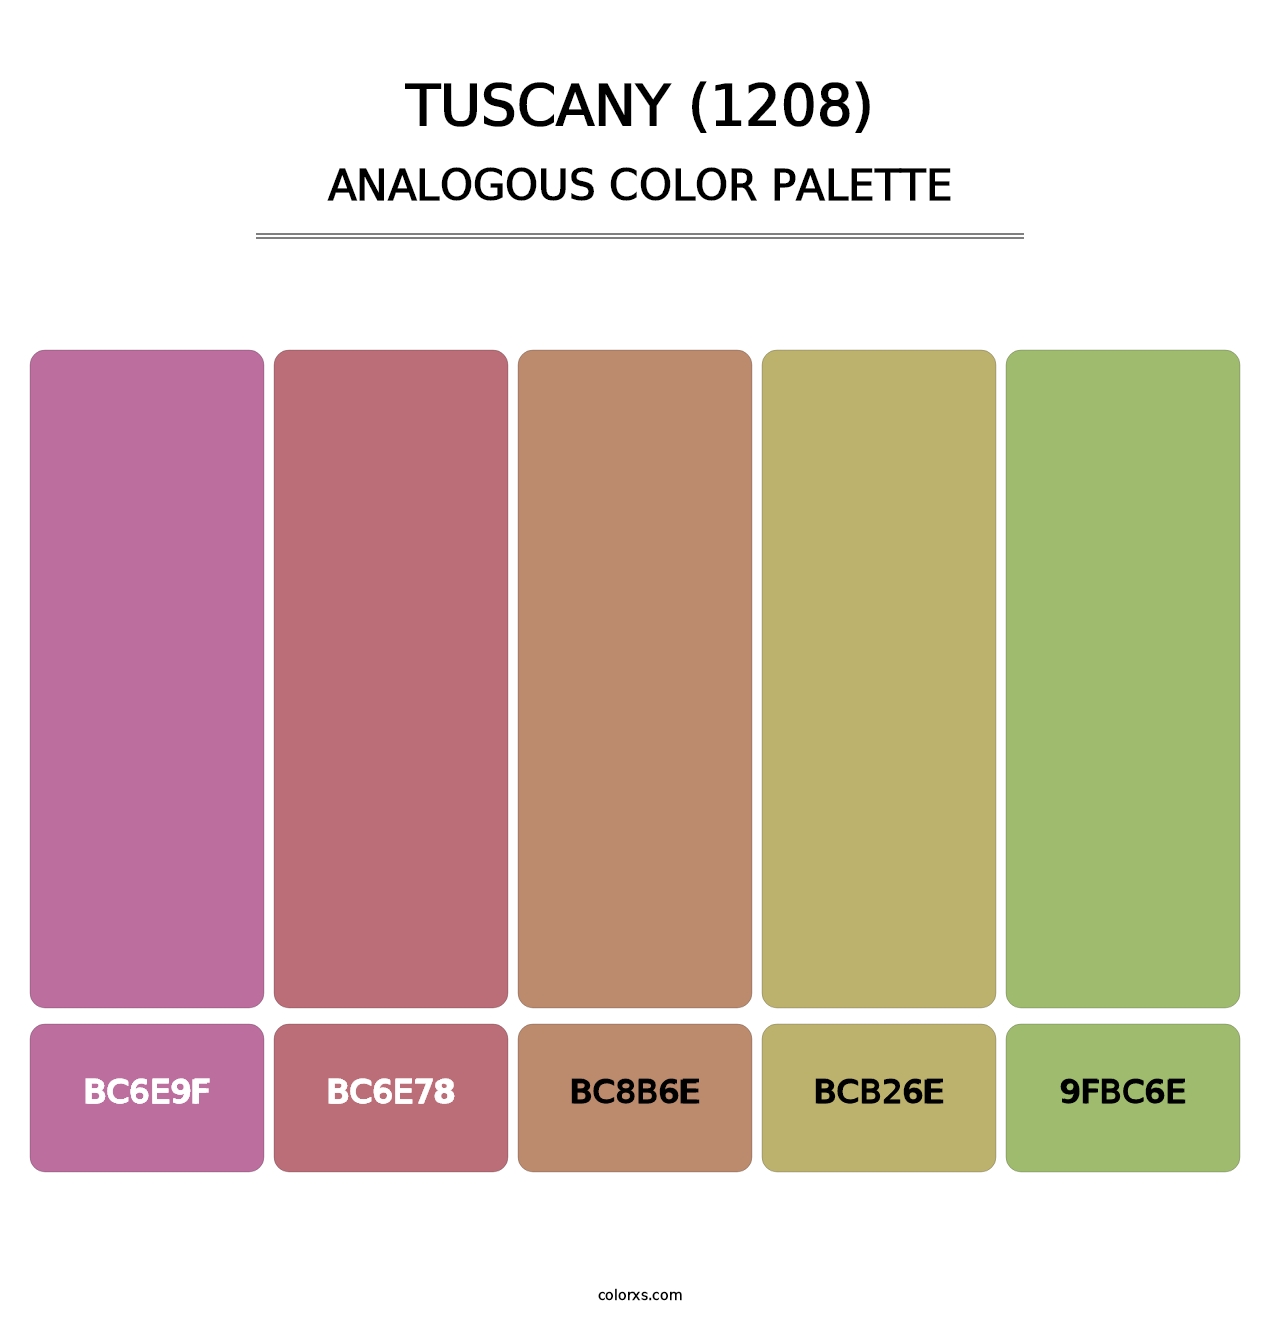 Tuscany (1208) - Analogous Color Palette